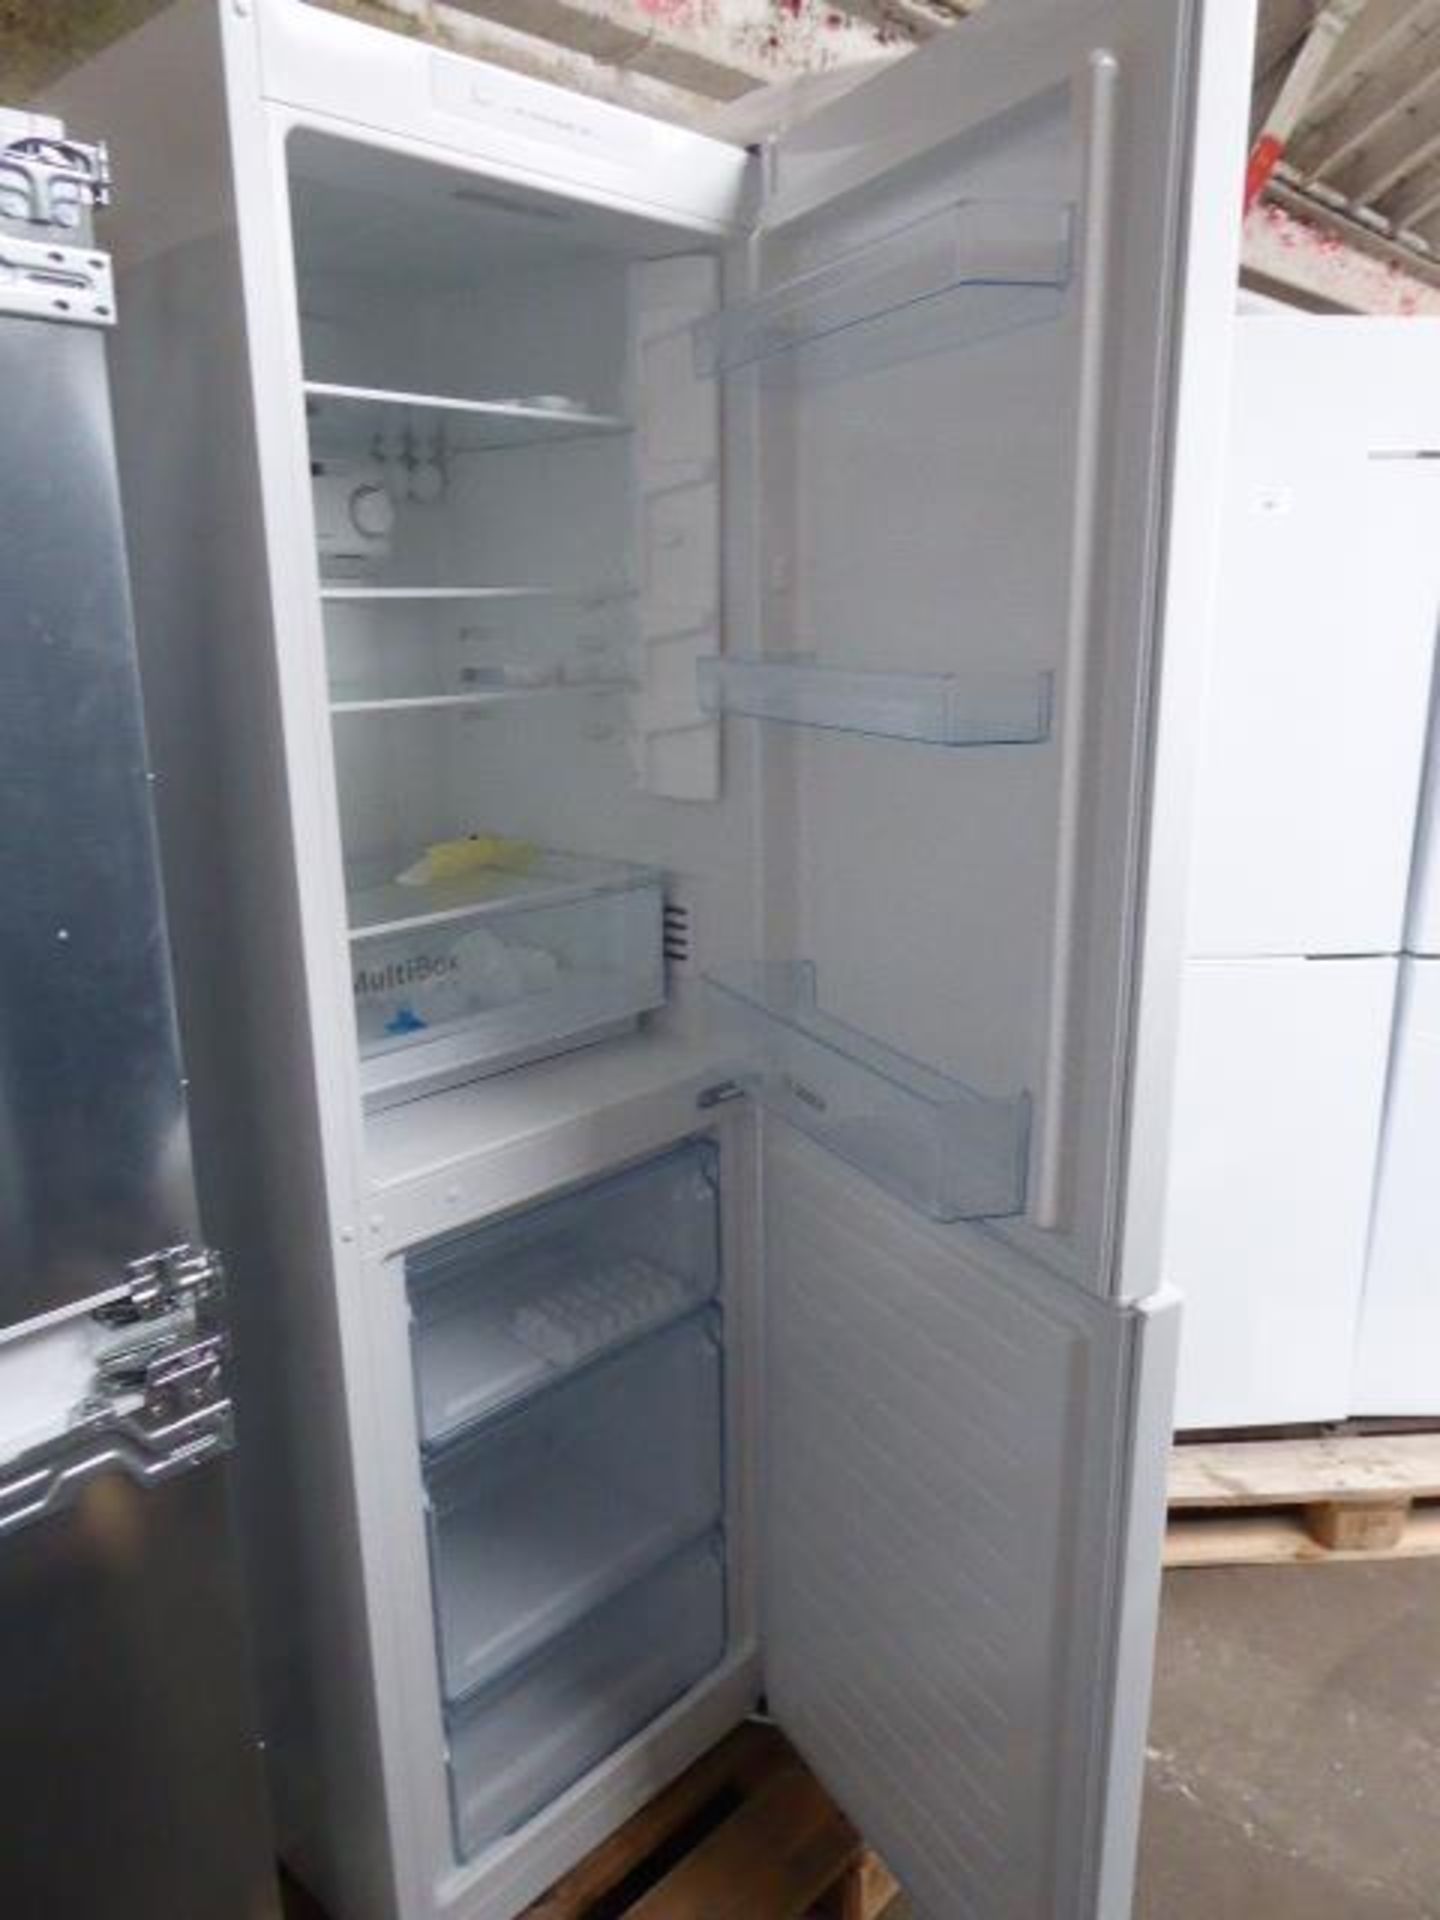 KGN34NWEAGB Bosch Free-standing fridge-freezer - Image 4 of 4